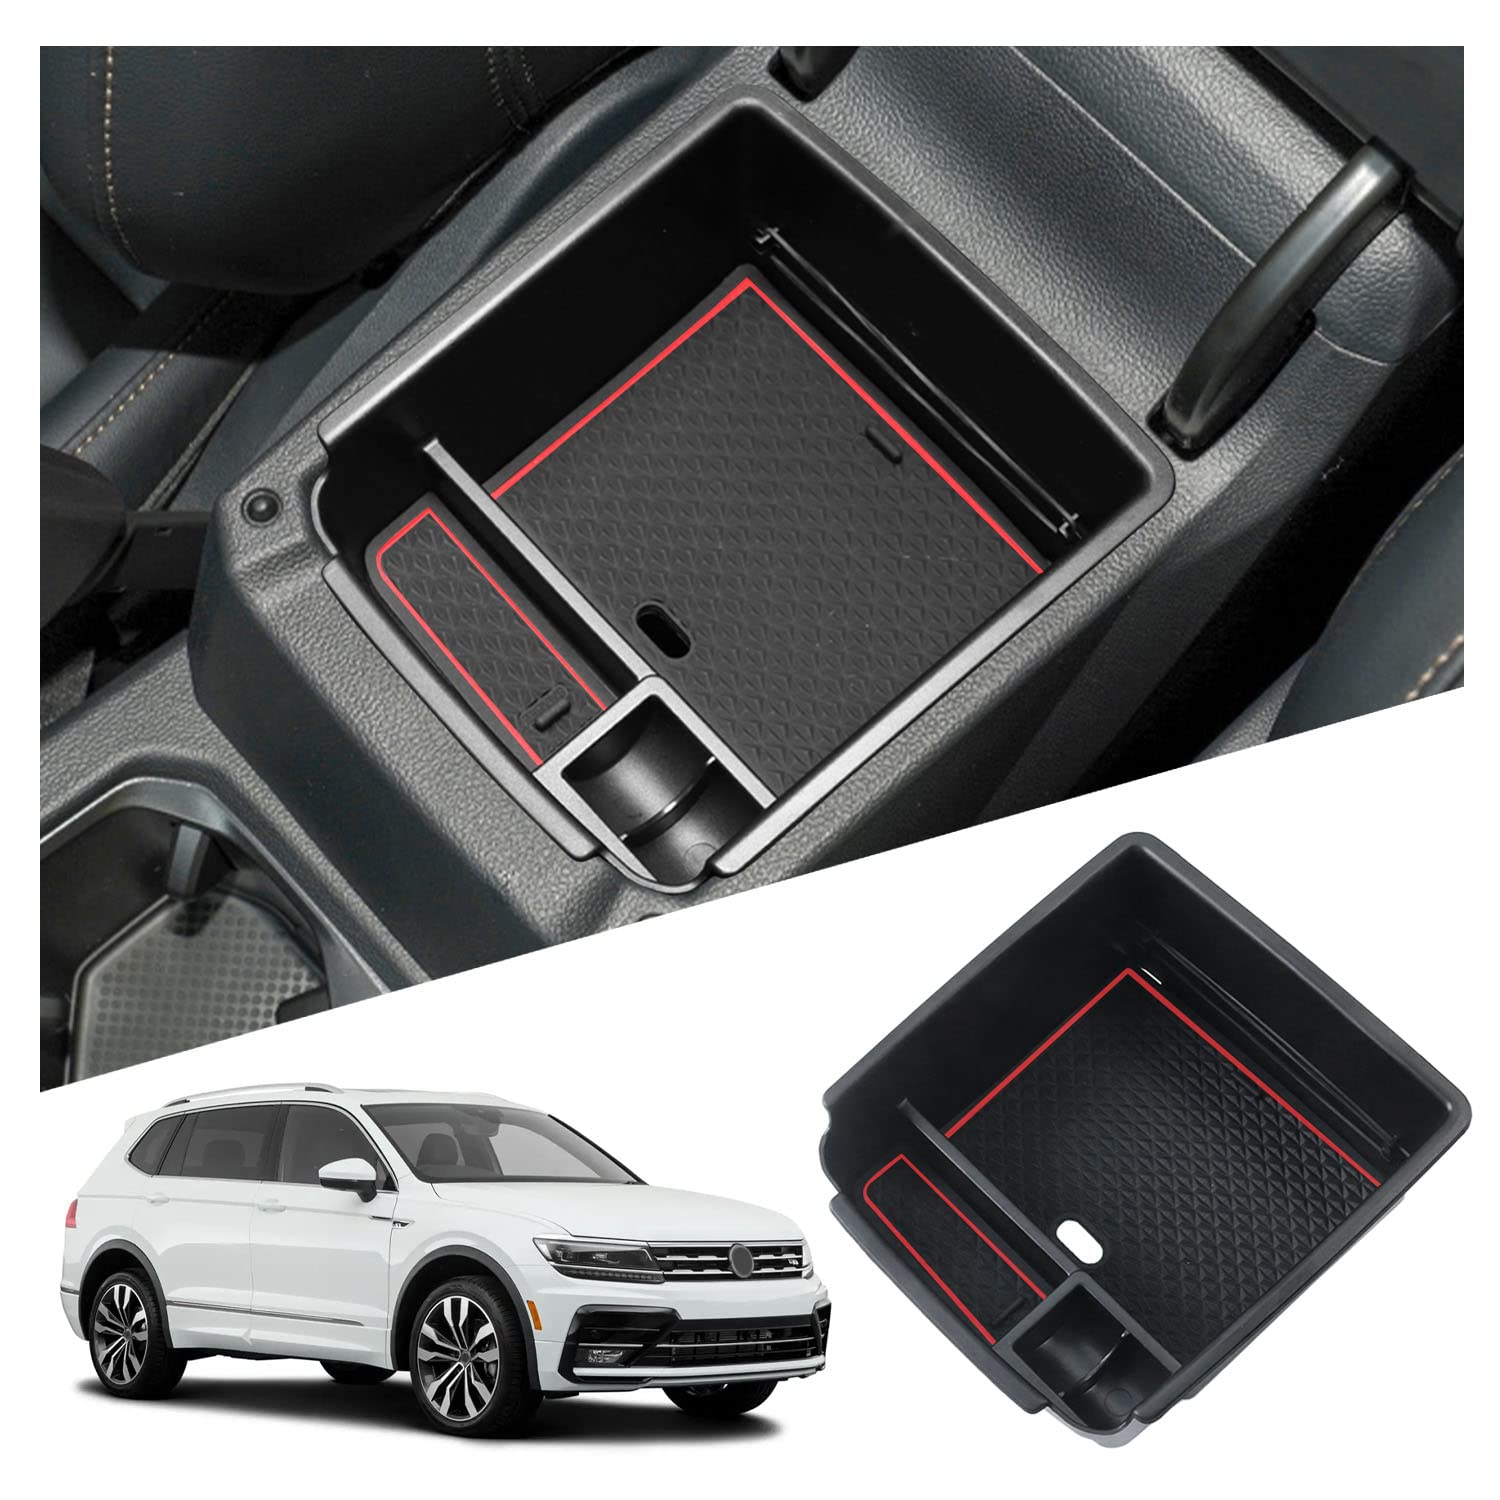 VW Tiguan 2 MK2 Centre Console Organizer Tray 2017+ - LFOTPP Car Accessories